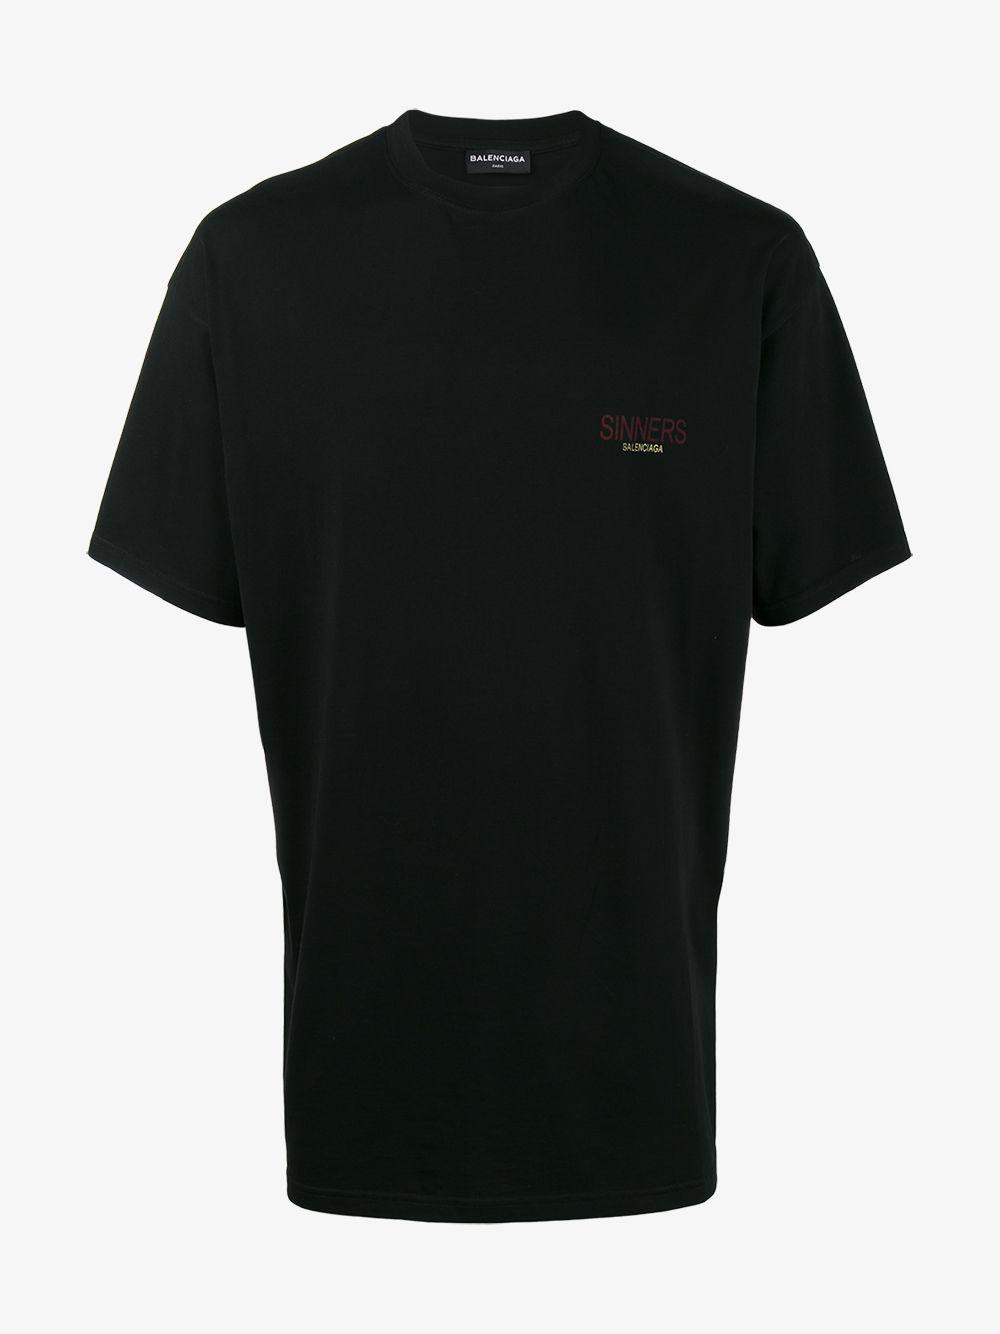 Balenciaga Sinners T-shirt in Black for Men - Lyst